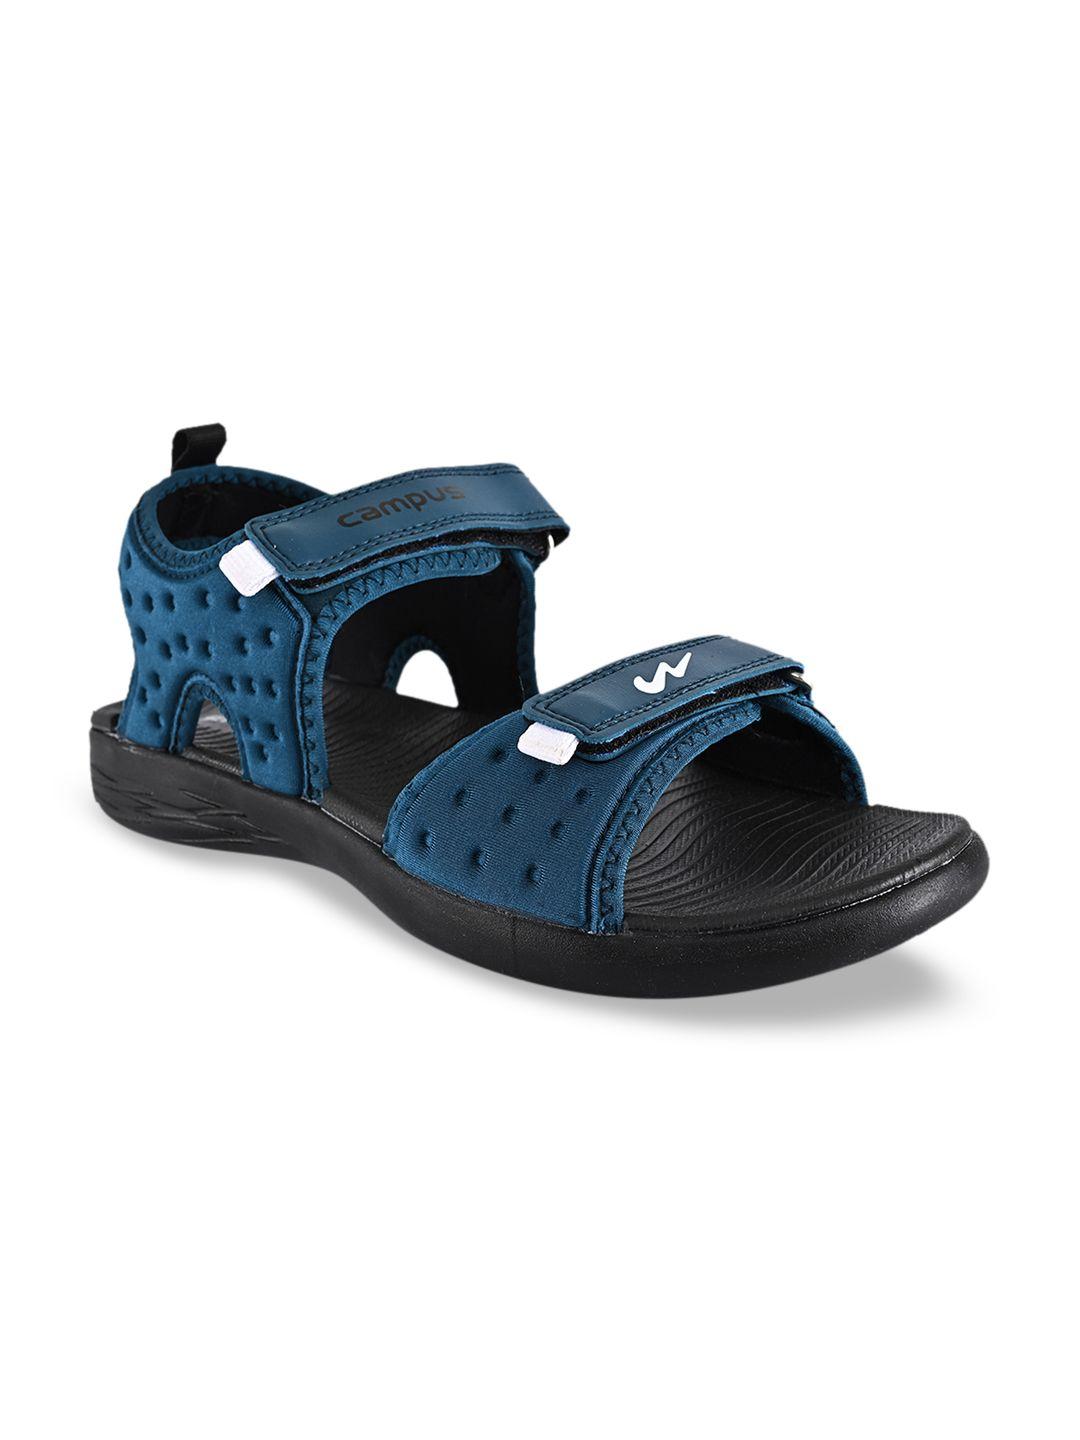 campus-men-teal-&-black-solid-sports-sandals